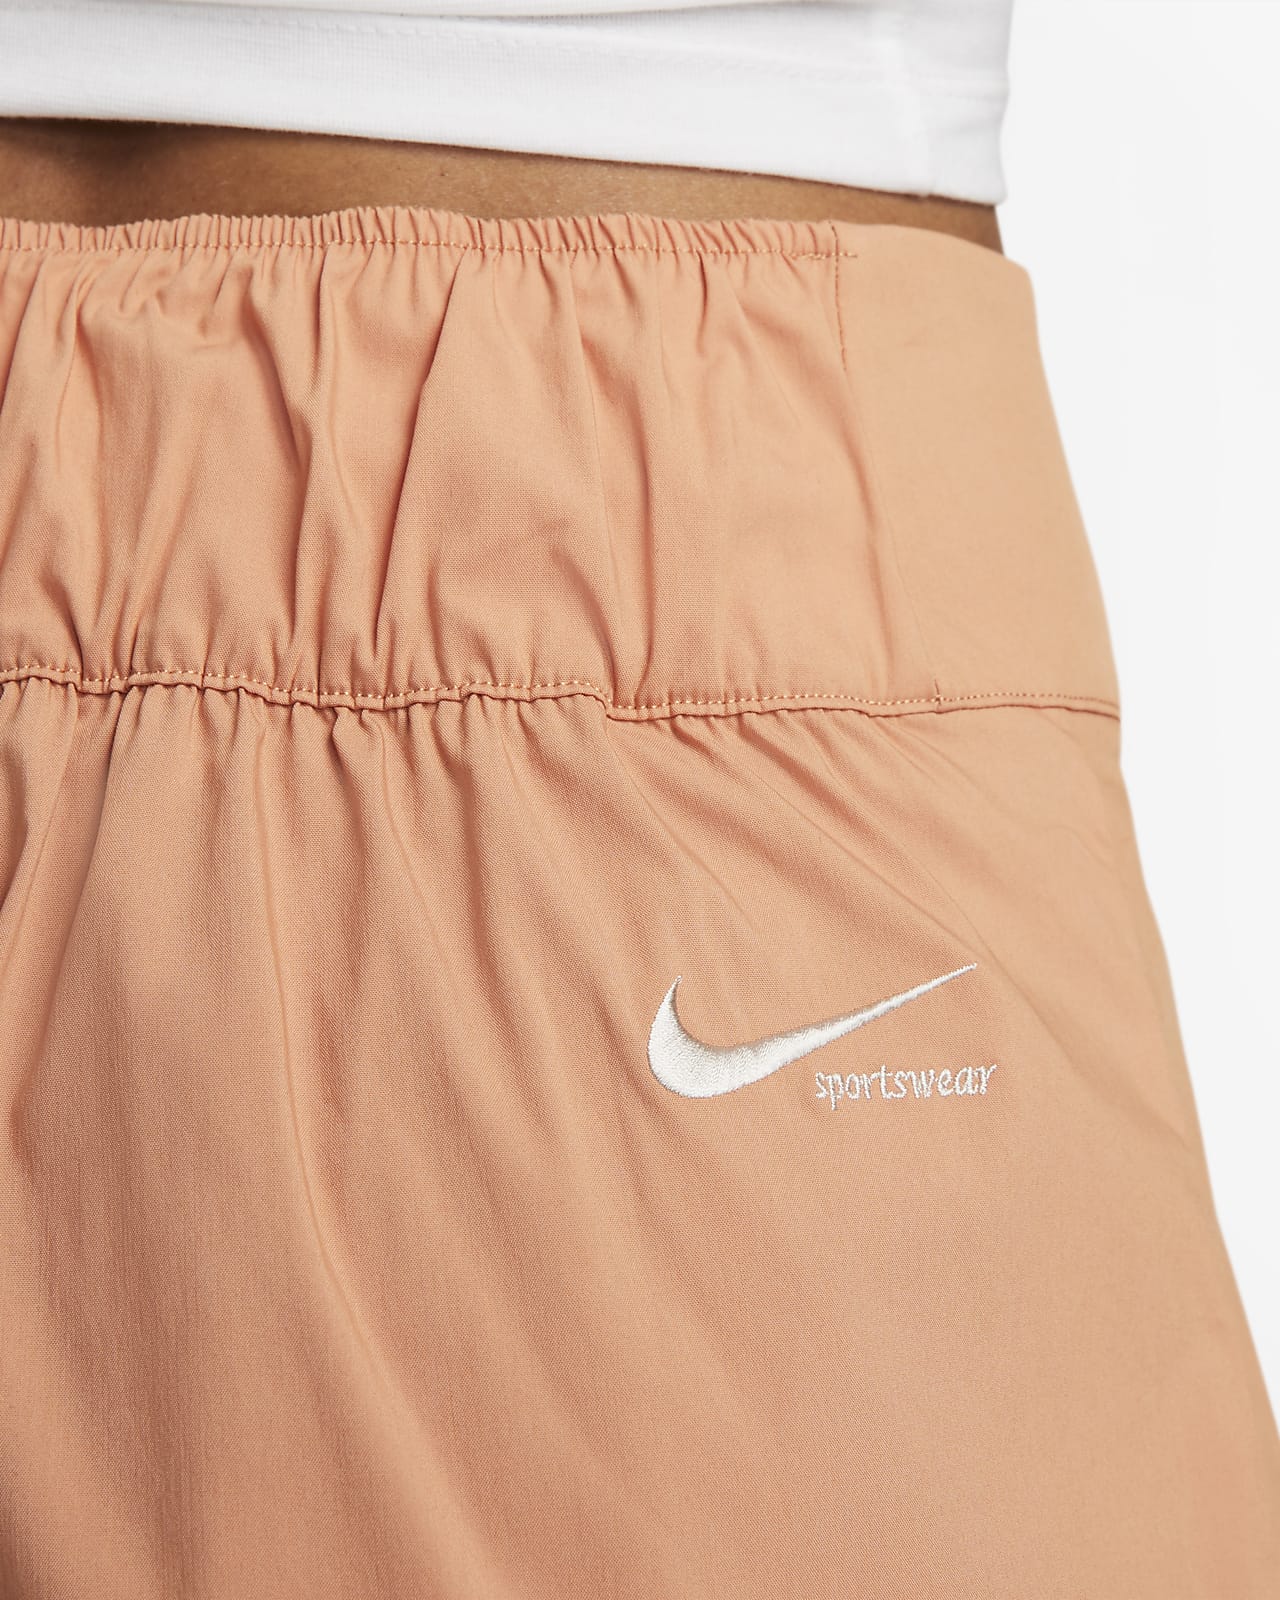 Nike Sportswear Collection Women's Trouser Shorts.